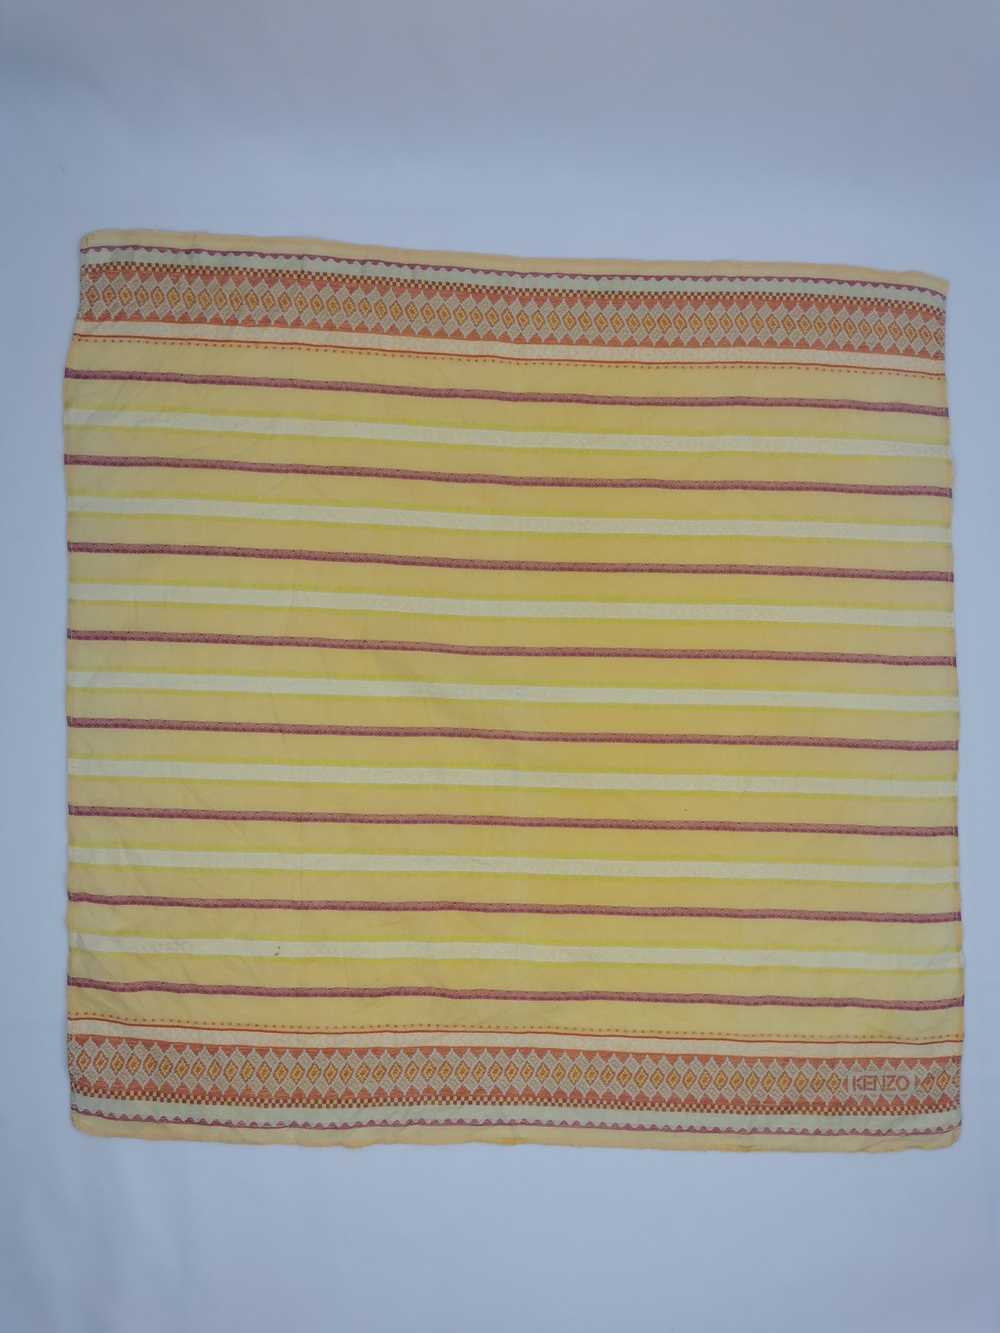 Kenzo Kenzo handkerchief / bandana / neckerchief - image 2